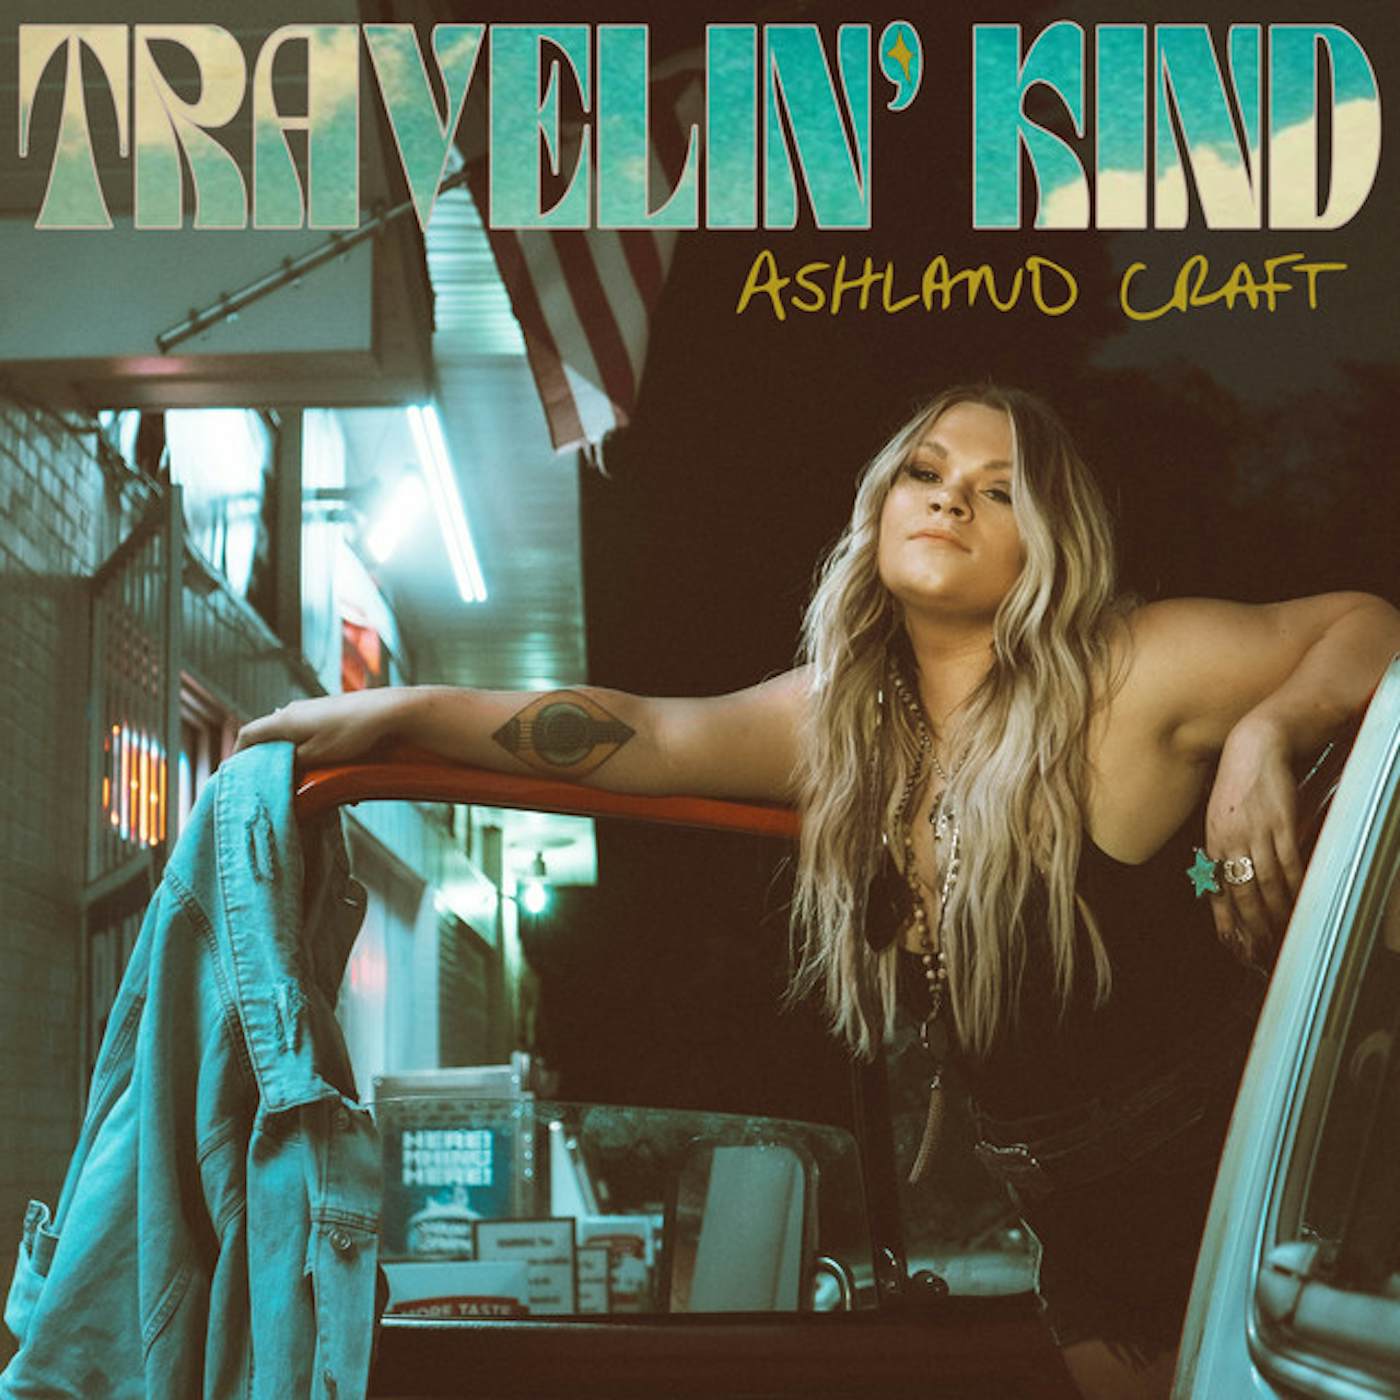 Ashland Craft TRAVELIN' KIND CD